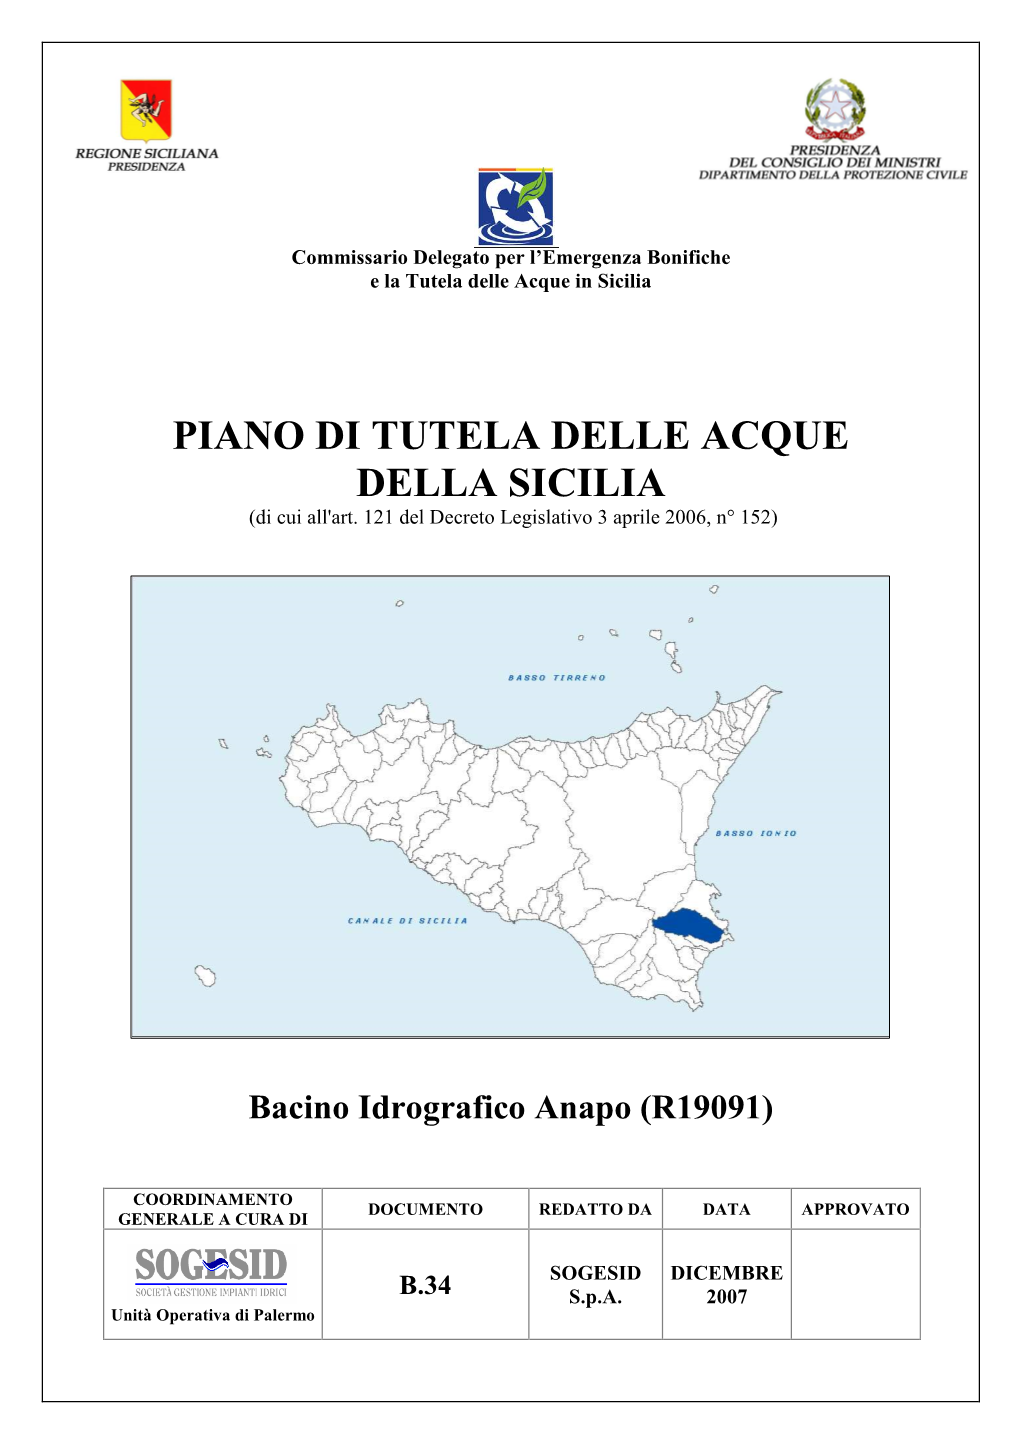 Bacino Idrografico Anapo (R19091)